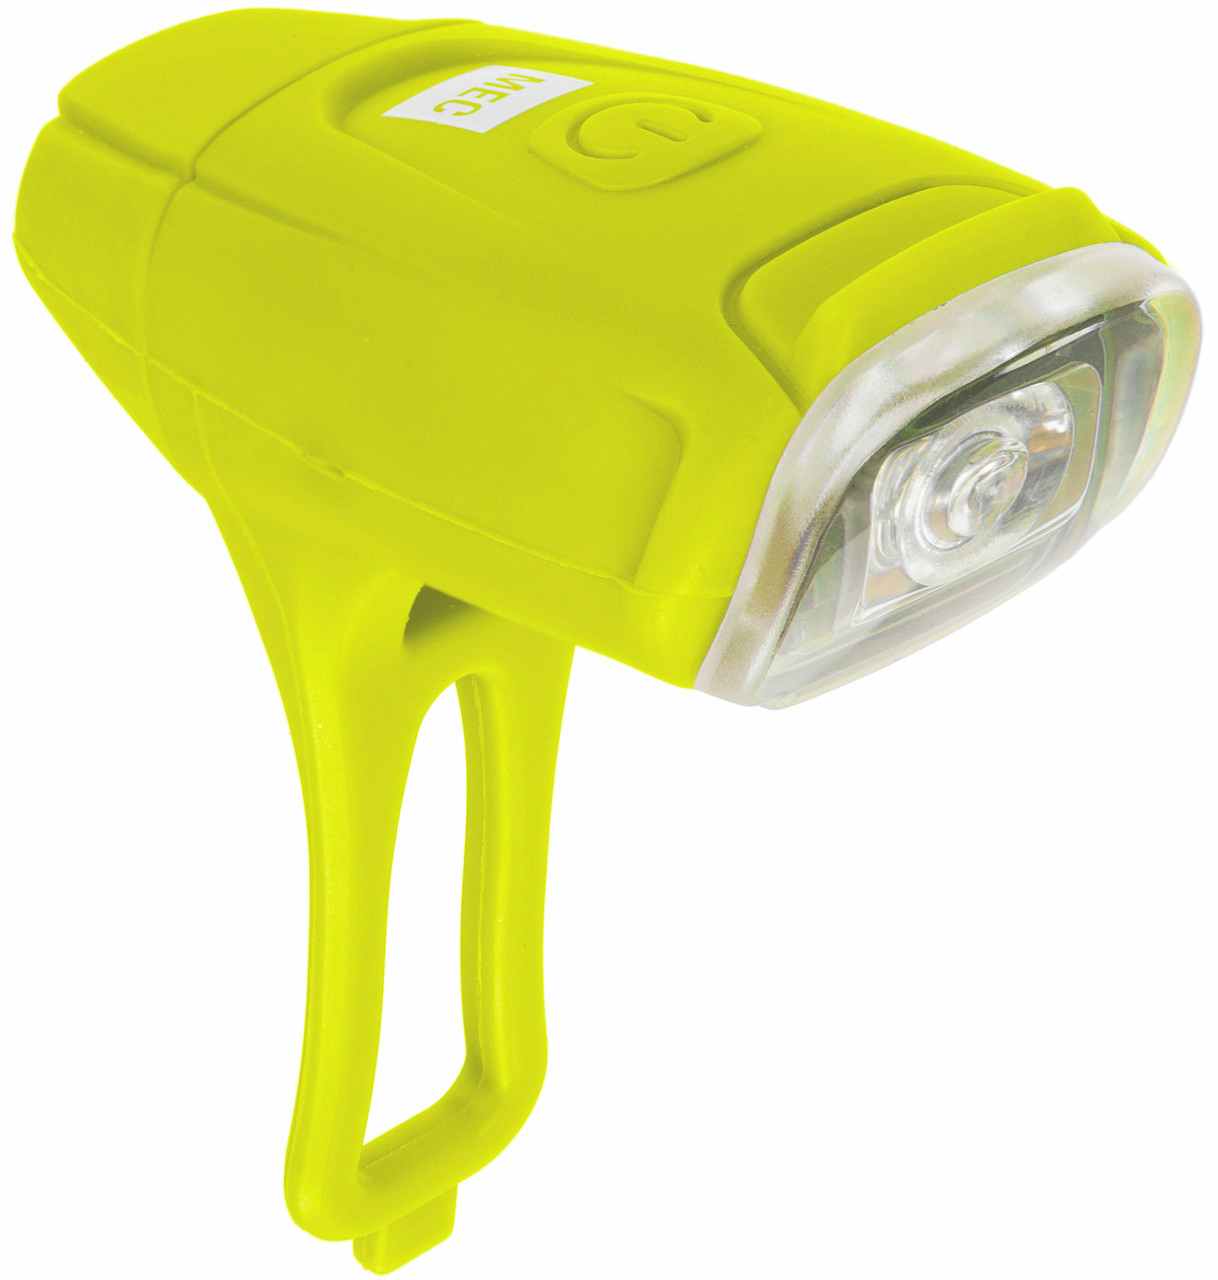 Galaxy Dual USB Red/White LED Bike Light Yellow